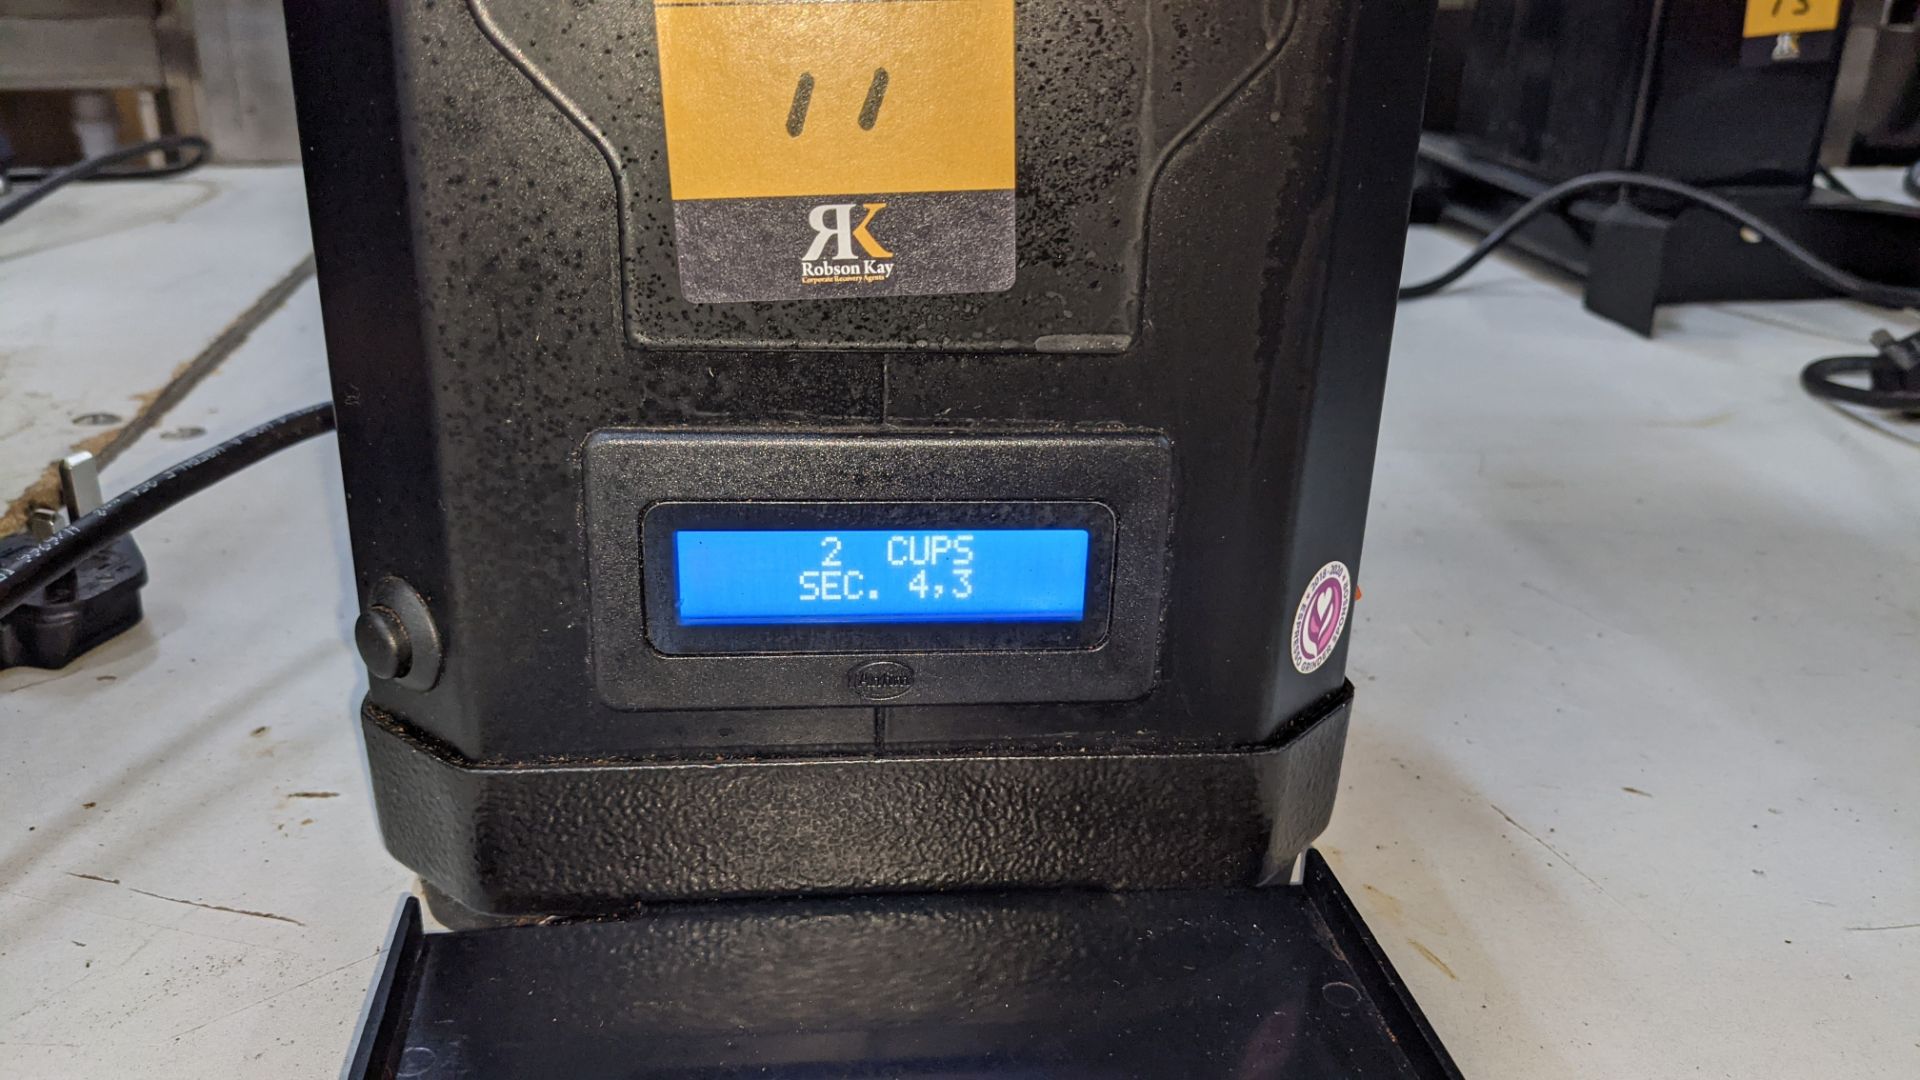 2019 Anfim model SPii titanium espresso grinder with digital display. Understood to have been purcha - Image 3 of 12